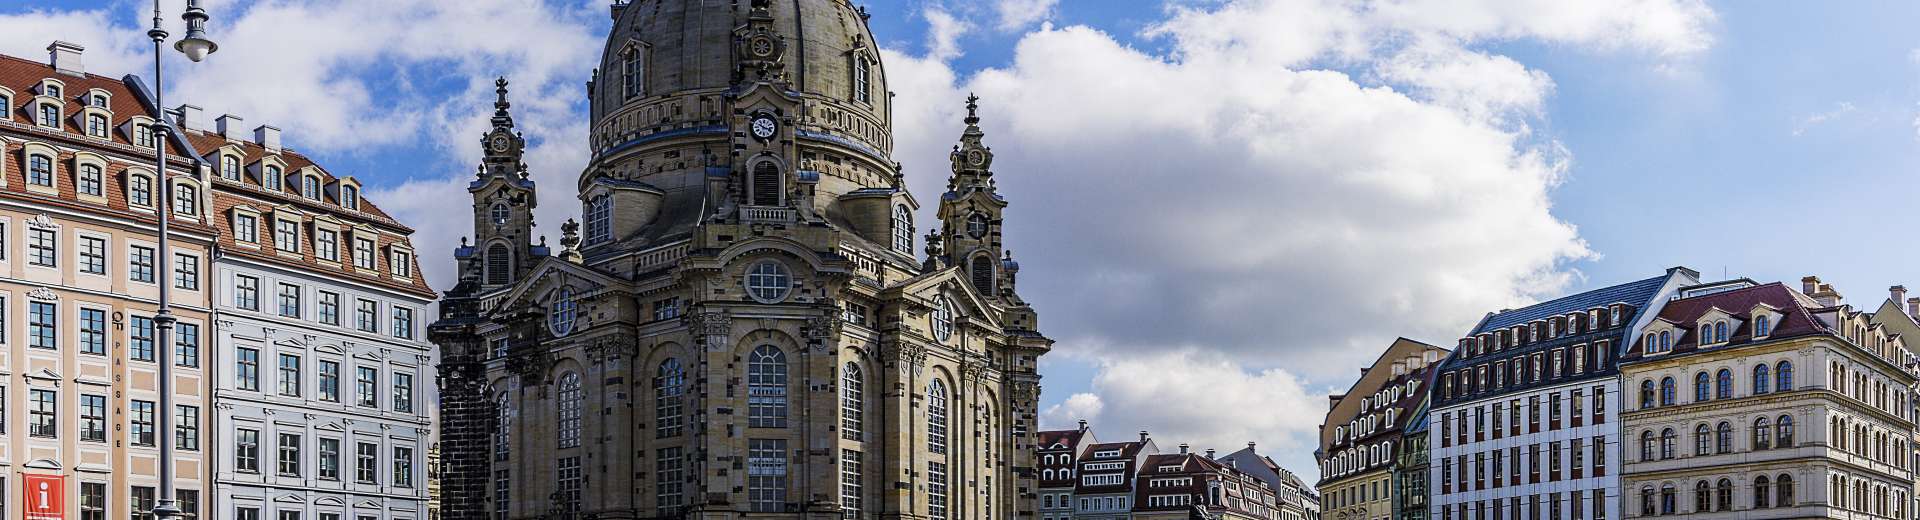 Frauenkirche  ©pixabay